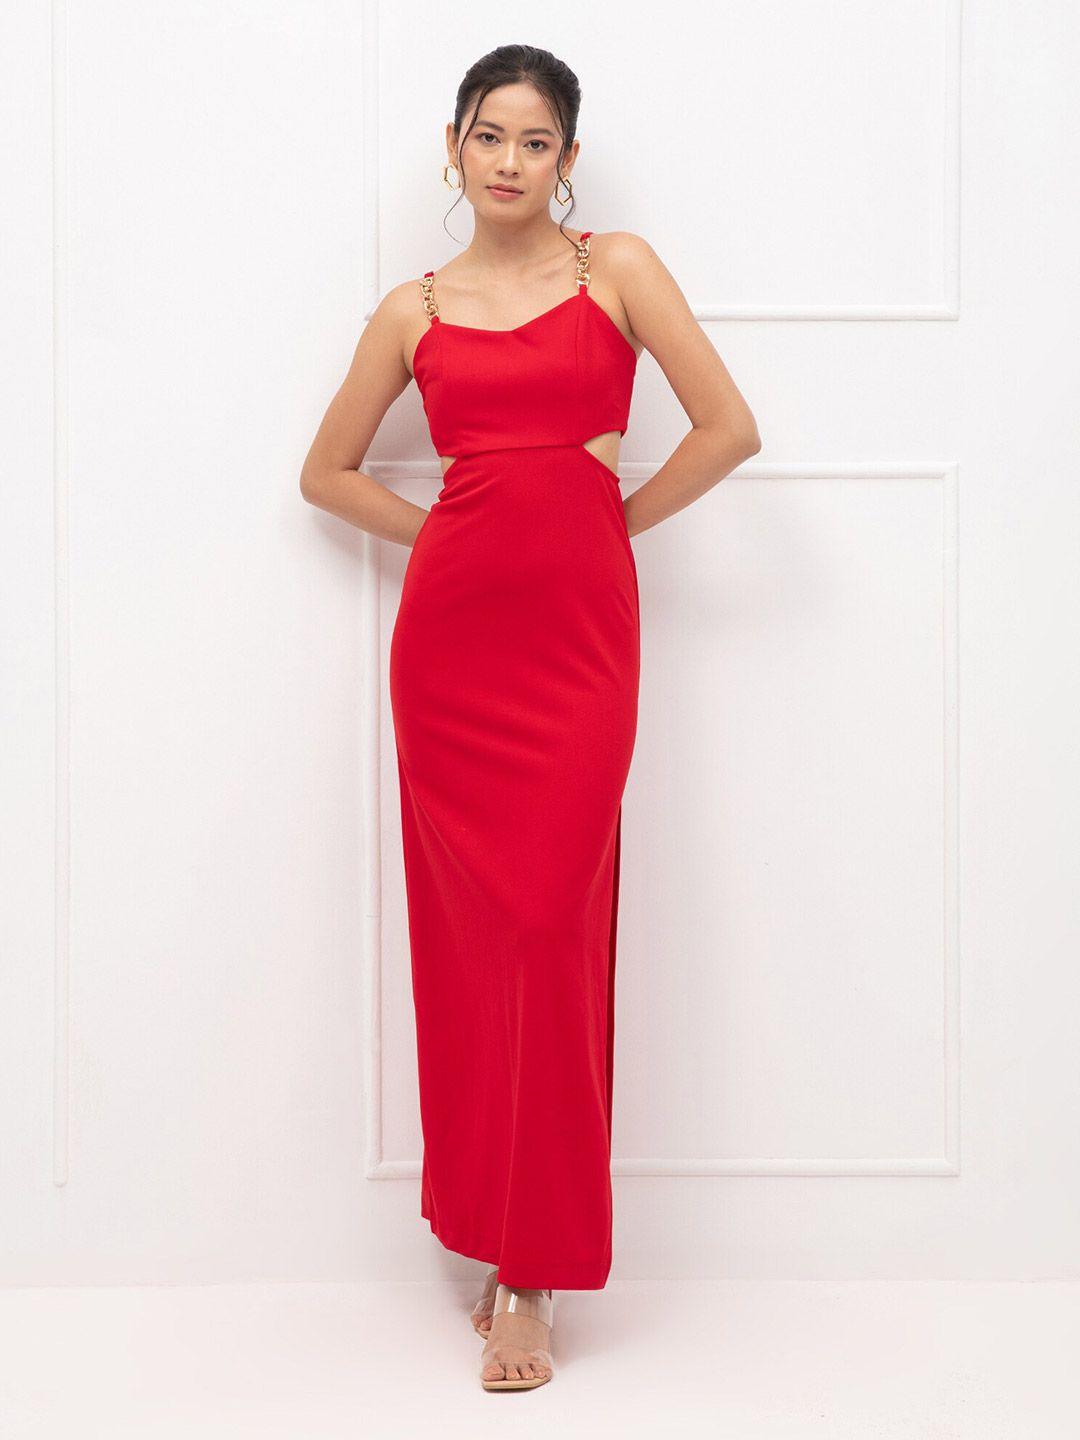 20dresses women red maxi dress